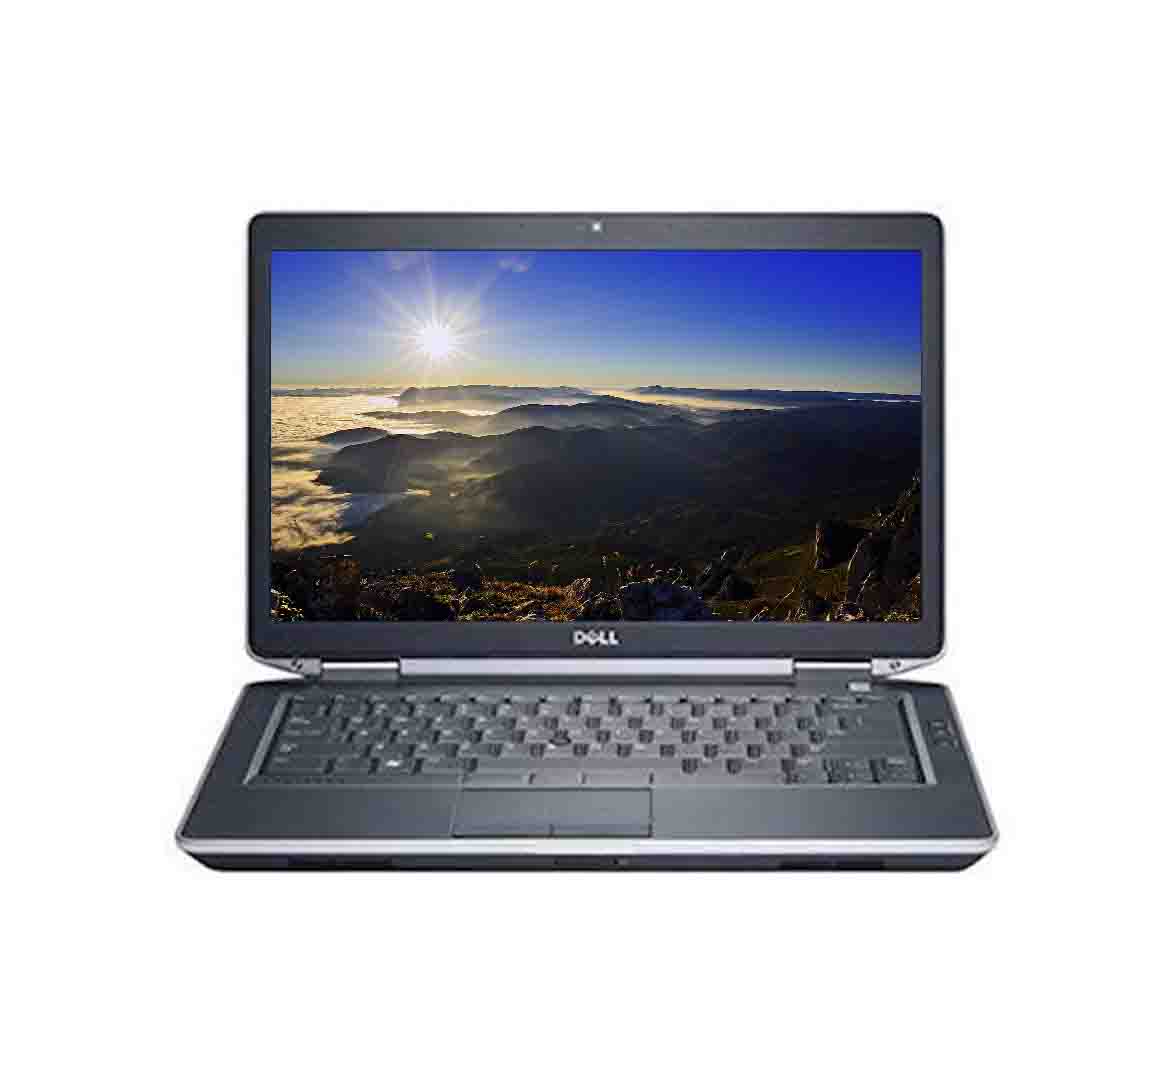 Dell Latitude E6430 Business Laptop, Intel Core i5-3rd Generation CPU, 8GB RAM, 500GB HDD, 14 inch Display, Windows 10 Pro, Refurbished Laptop